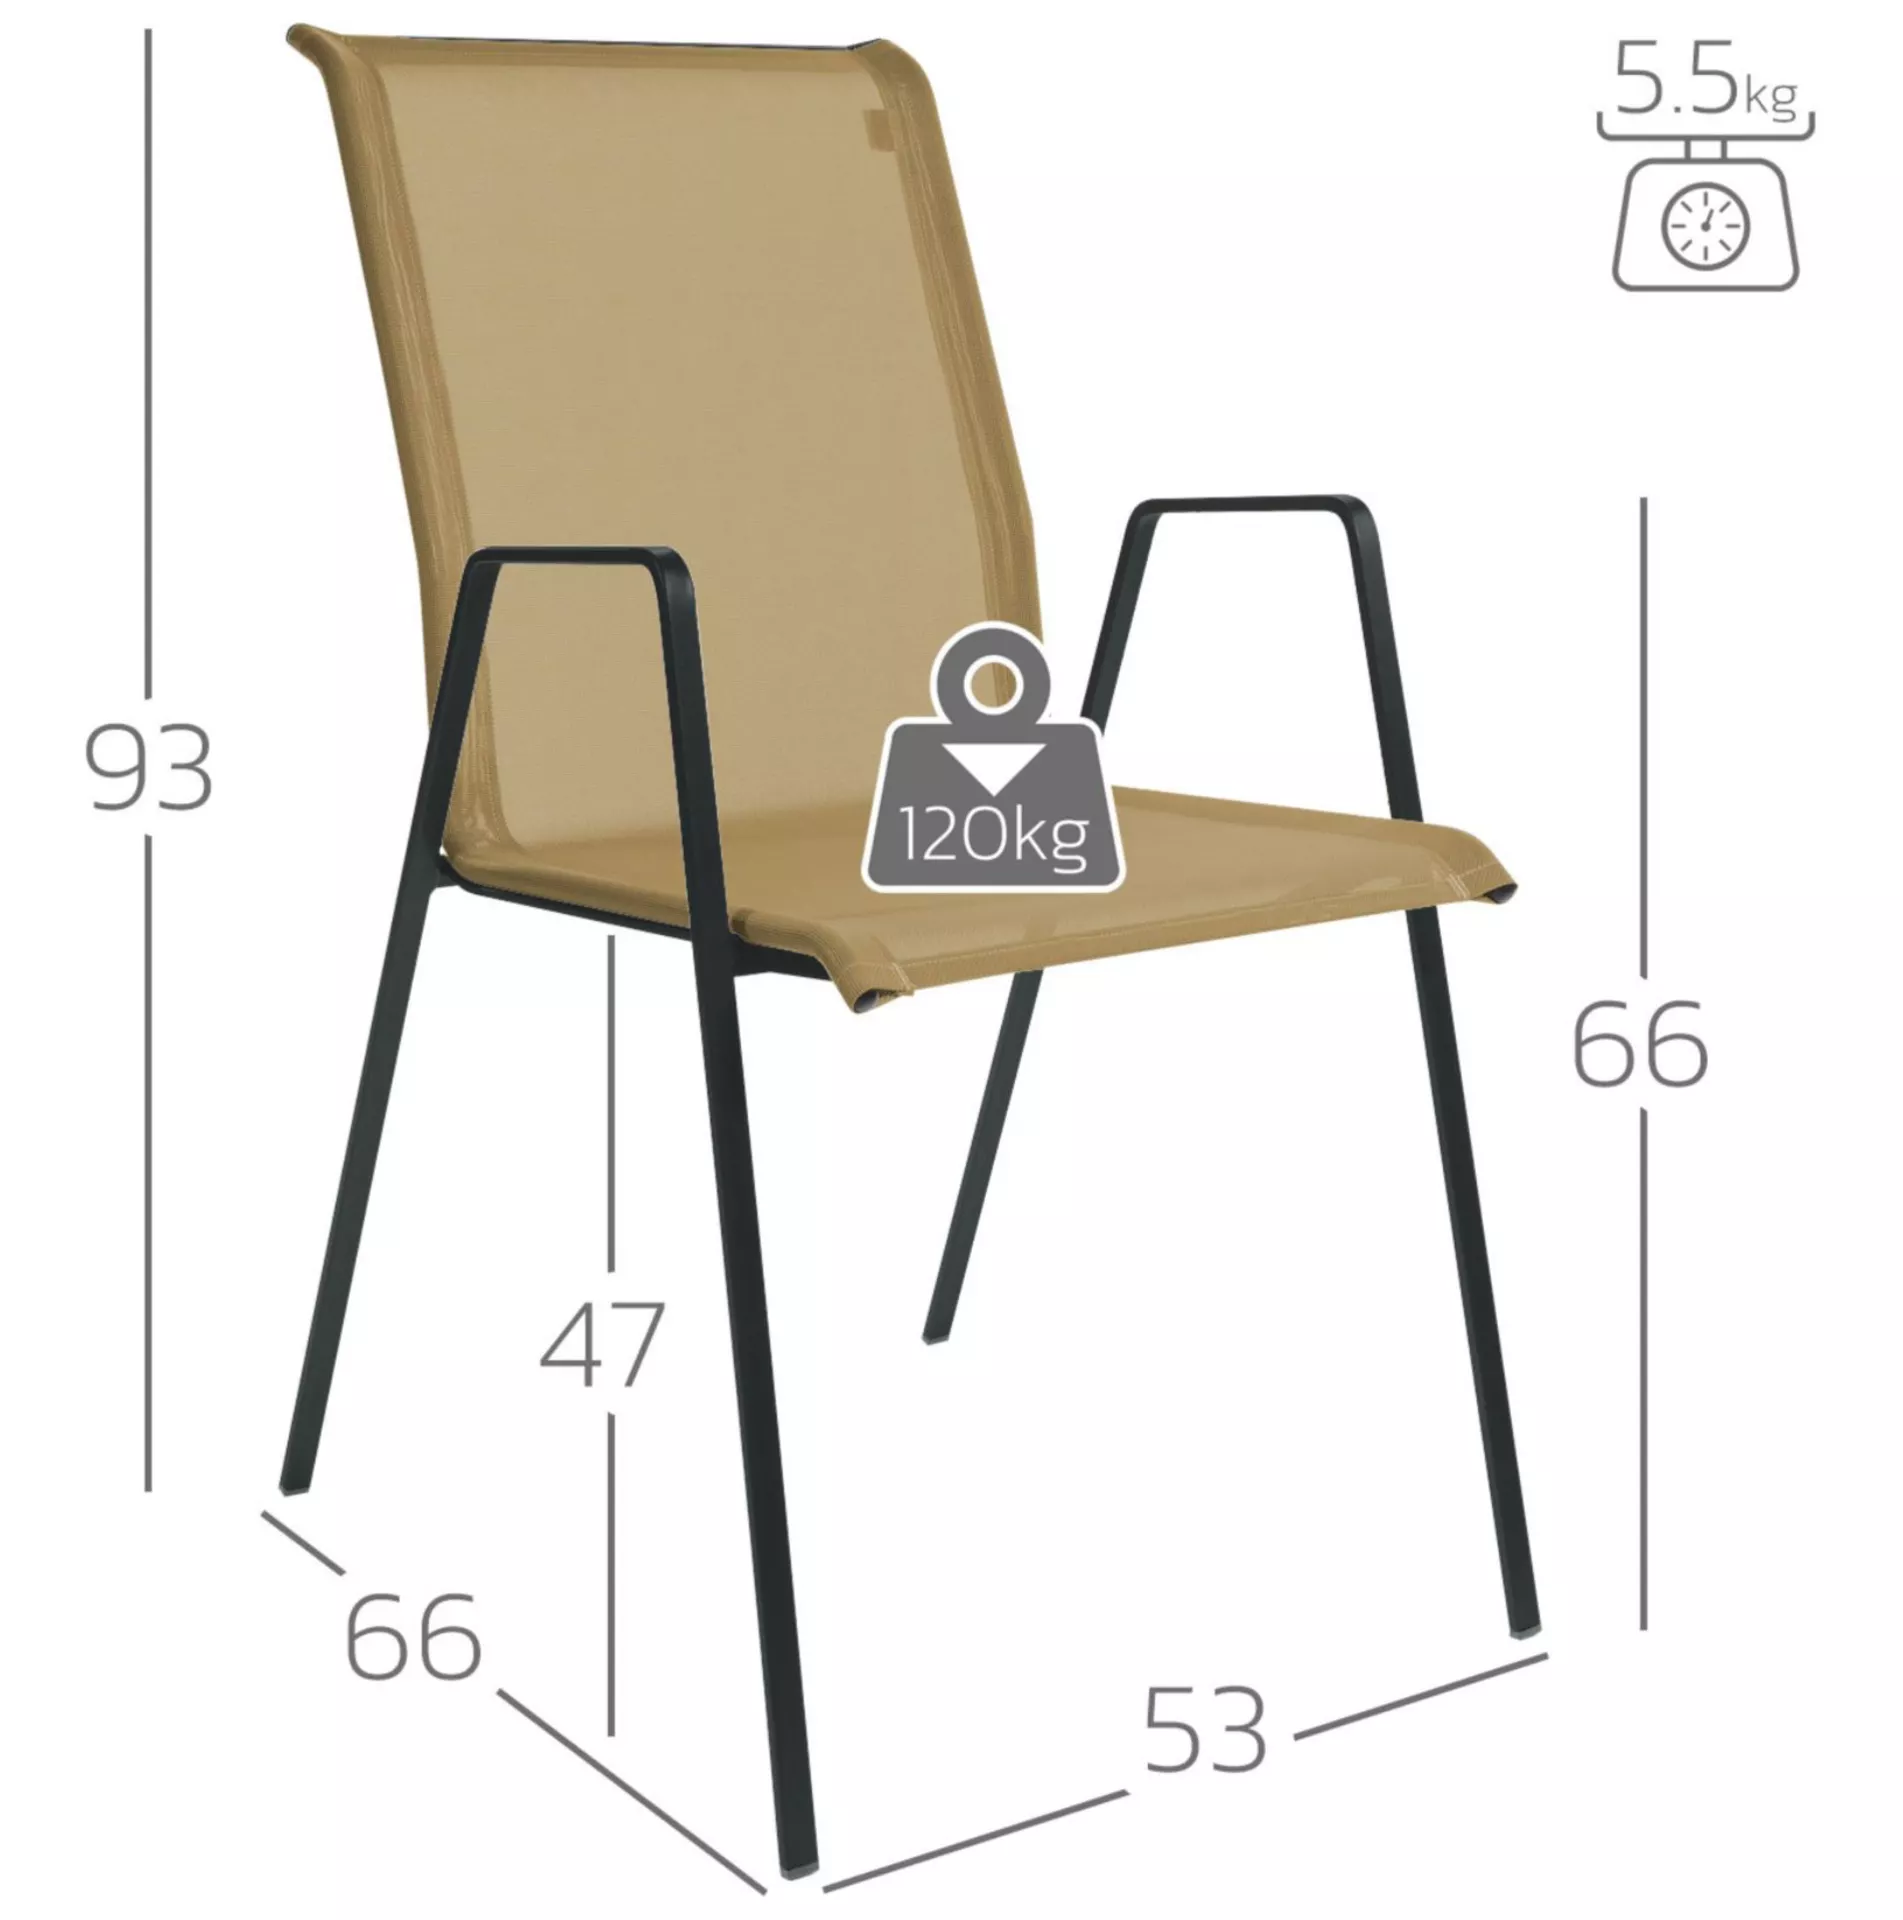 Matten-Sessel Luzern Schaffner / Farbe: Sand